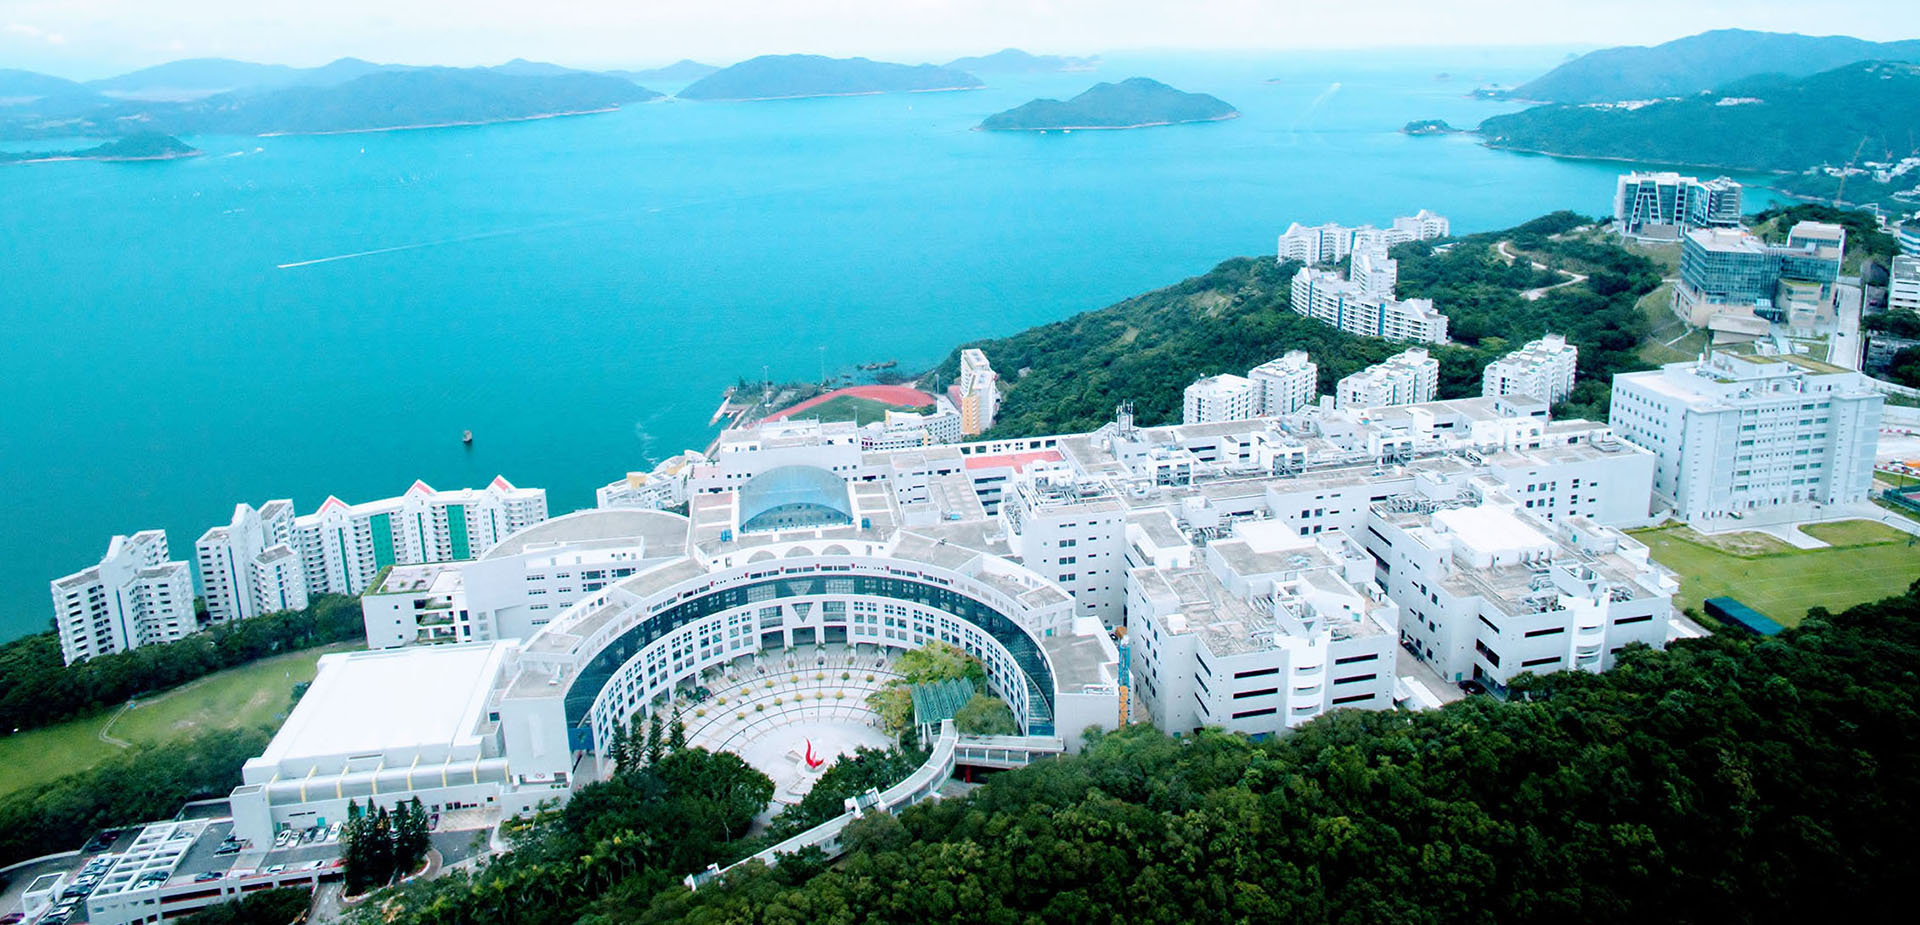 Hong Kong University of Science & Technology - Phase B1, B2, C1, C2